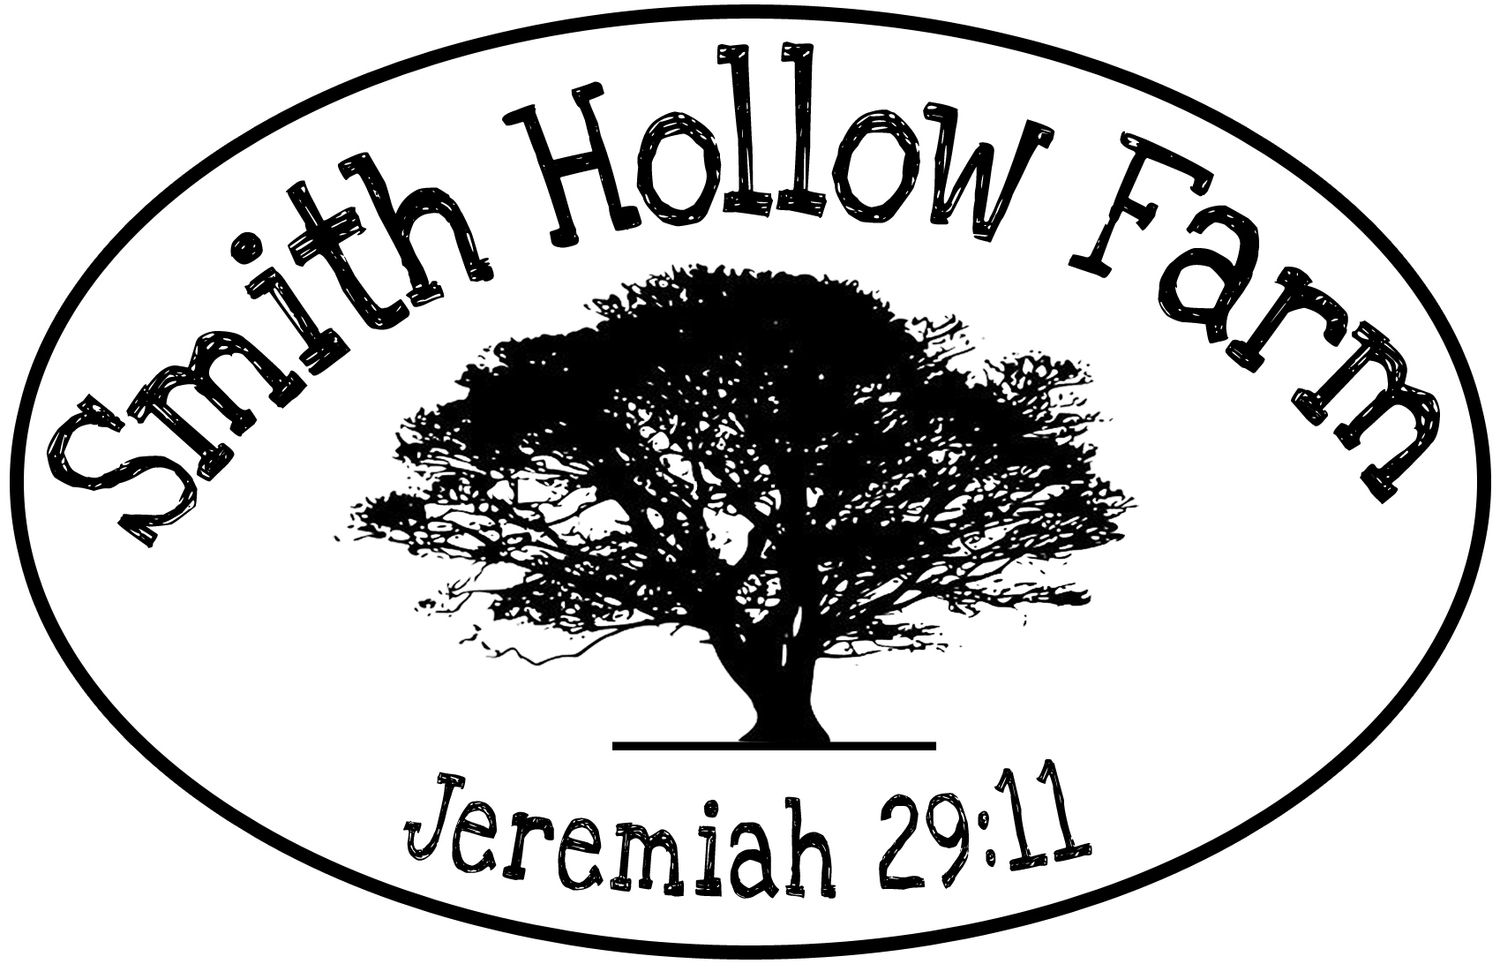 Smith Hollow Farm